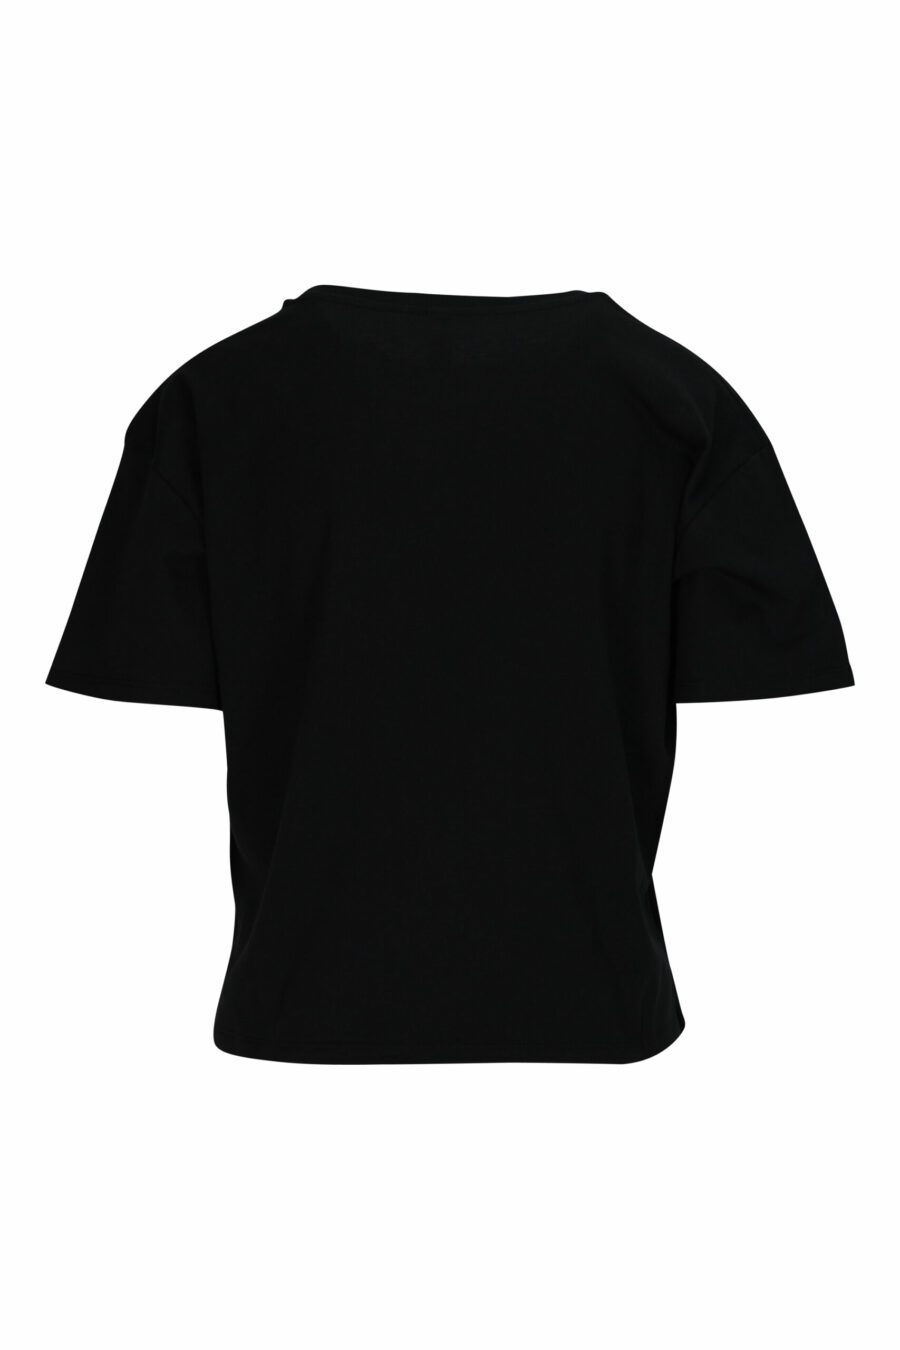 T-shirt preta de tamanho grande com mini-logotipo multicolorido - 667113355894 1 scaled